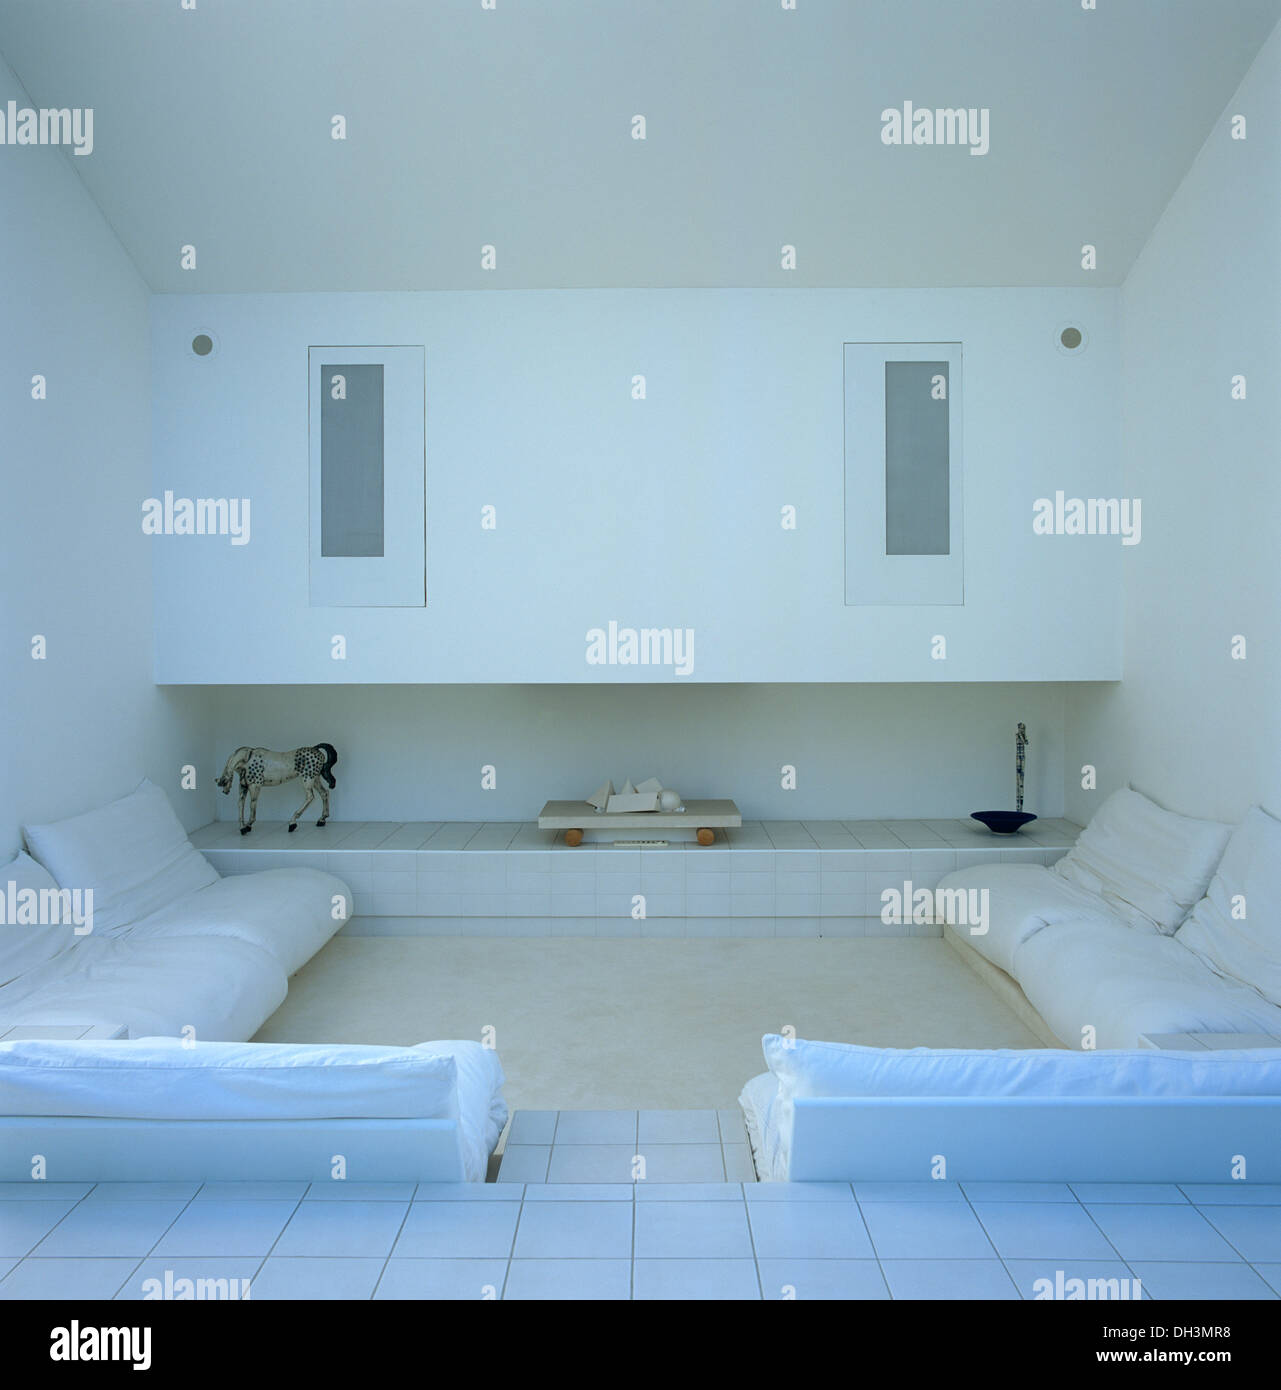 Sala de estar hundida fotografías e imágenes de alta resolución - Alamy